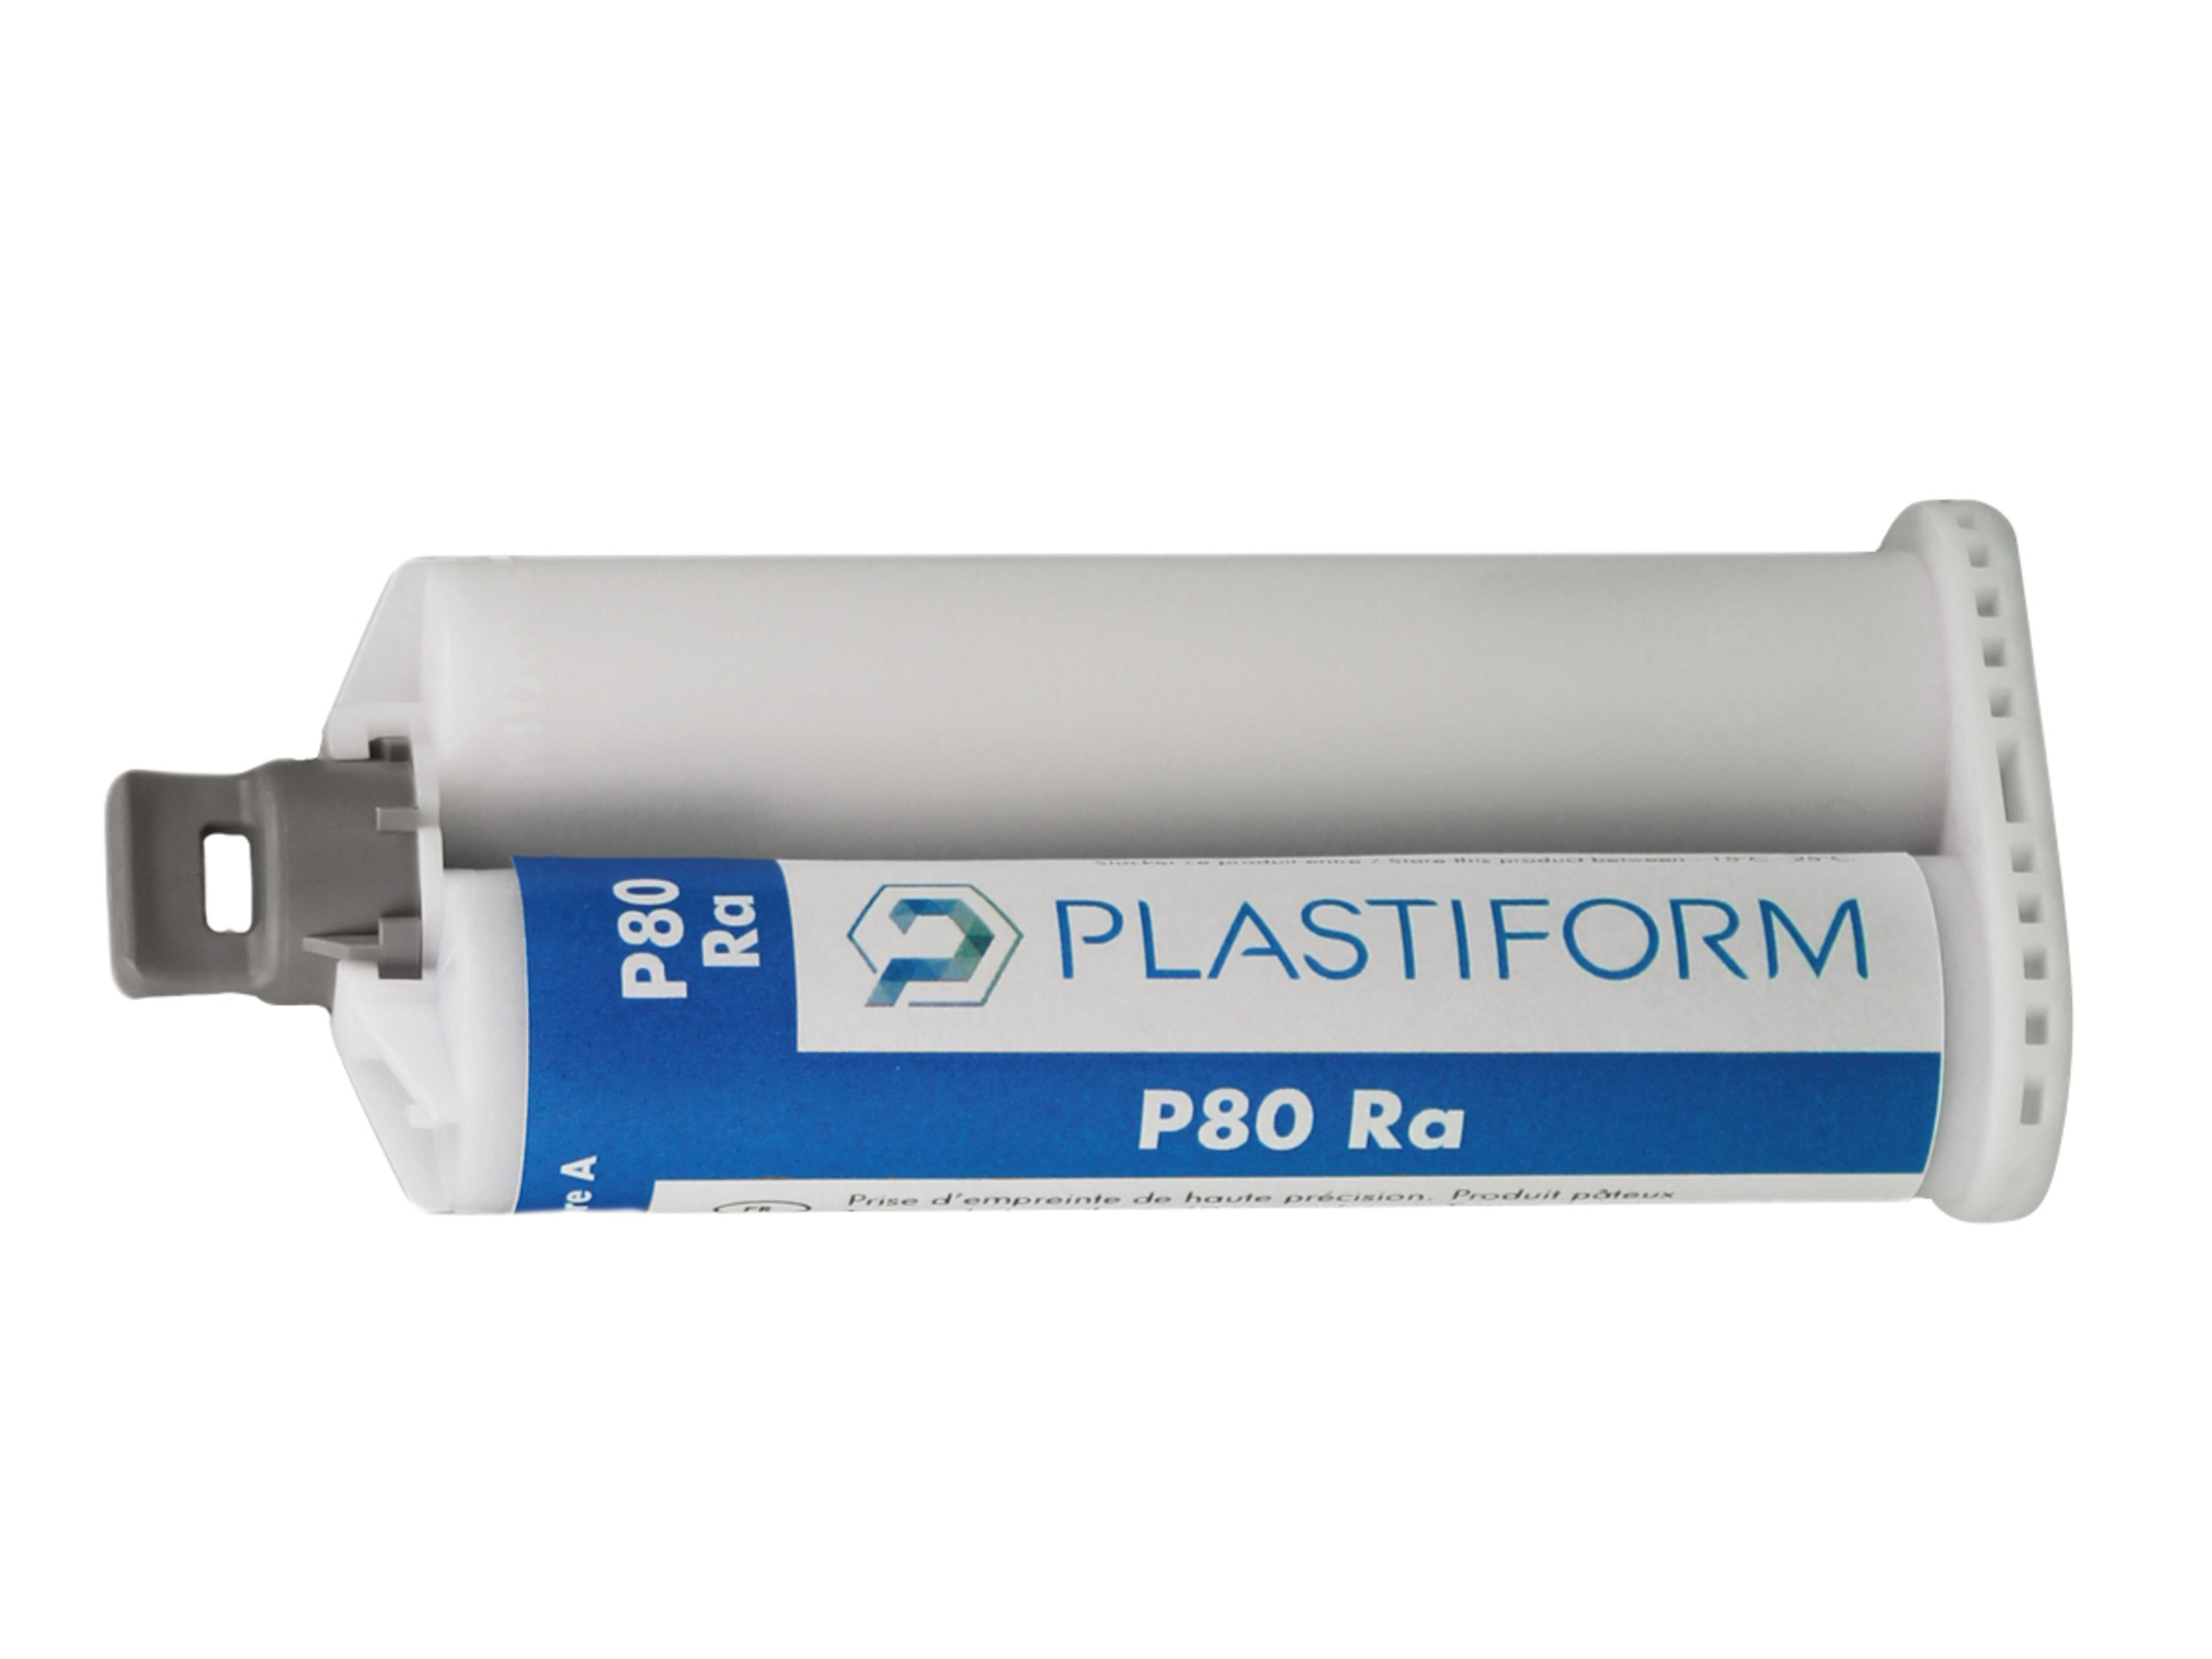 Plastiform P80Ra Moulding Paste (Box of 8) 06869118